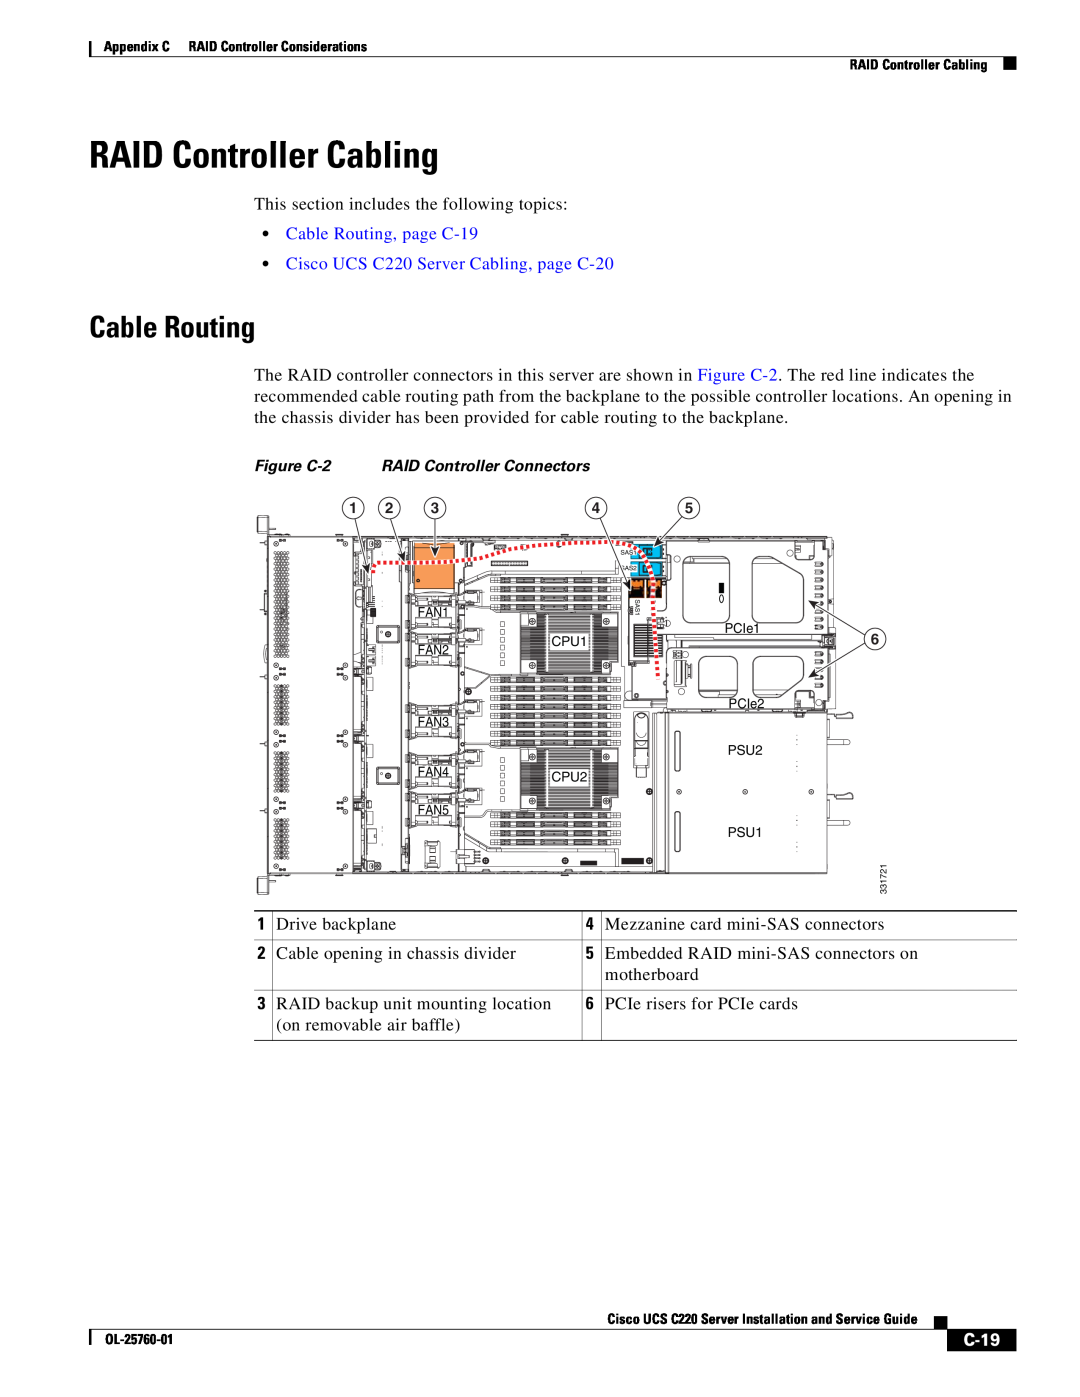 Cisco Systems UCUCSEZC220M3S, UCSSP6C220E, UCSRAID9266CV, 9266CV-8i manual RAID Controller Cabling, Cable Routing, C-19 